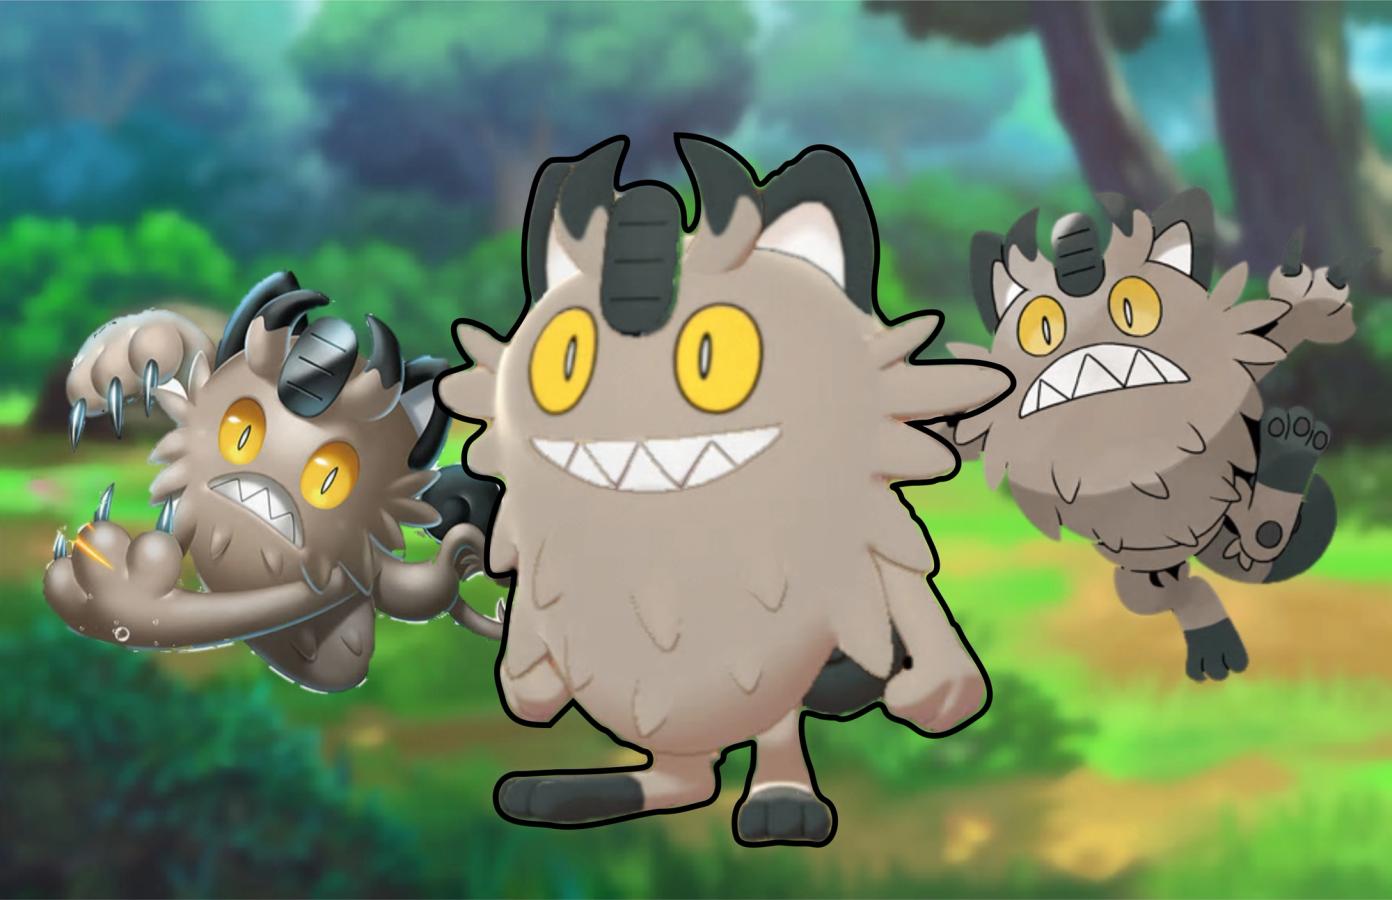 Galarian Meowth is the ugliest Pokemon